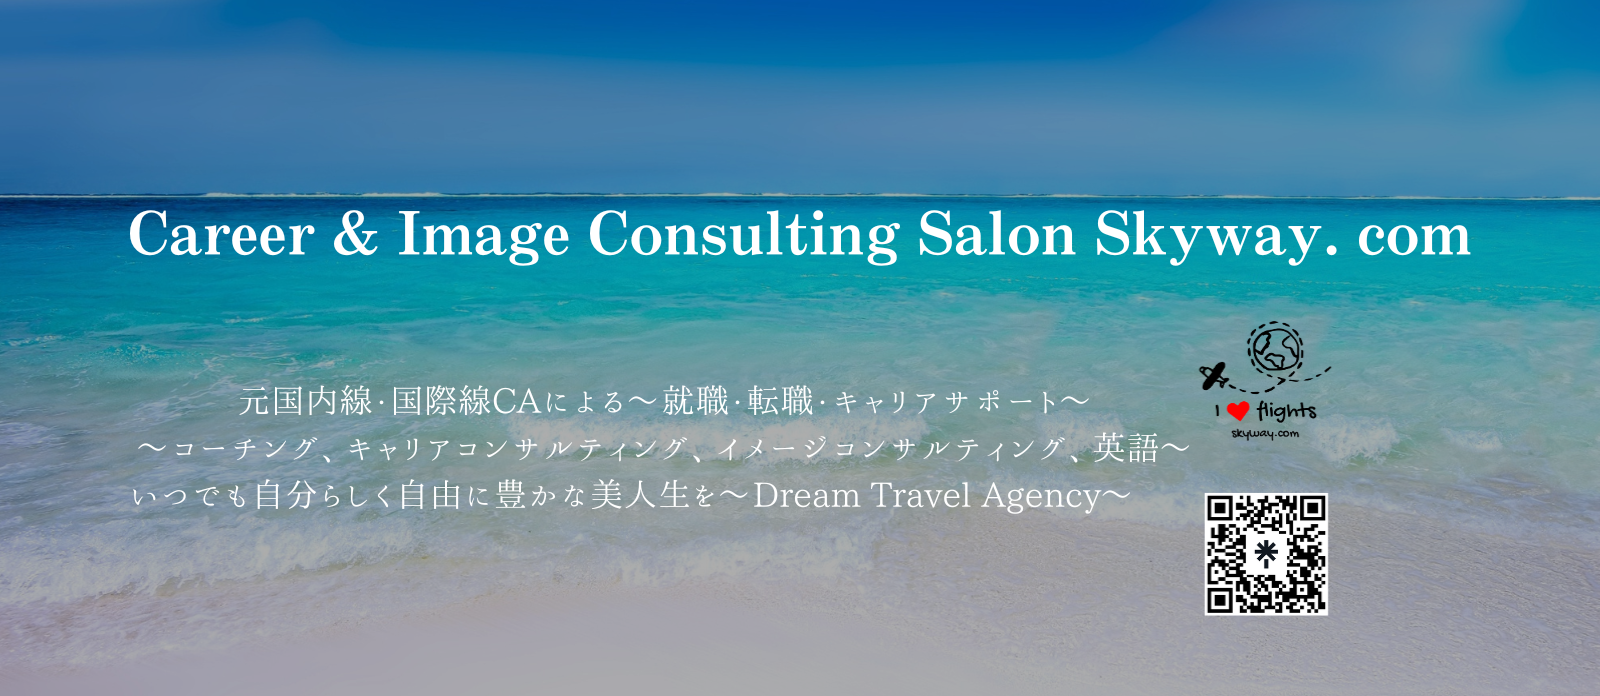 Career & Image Consulting Salon Skyway. com